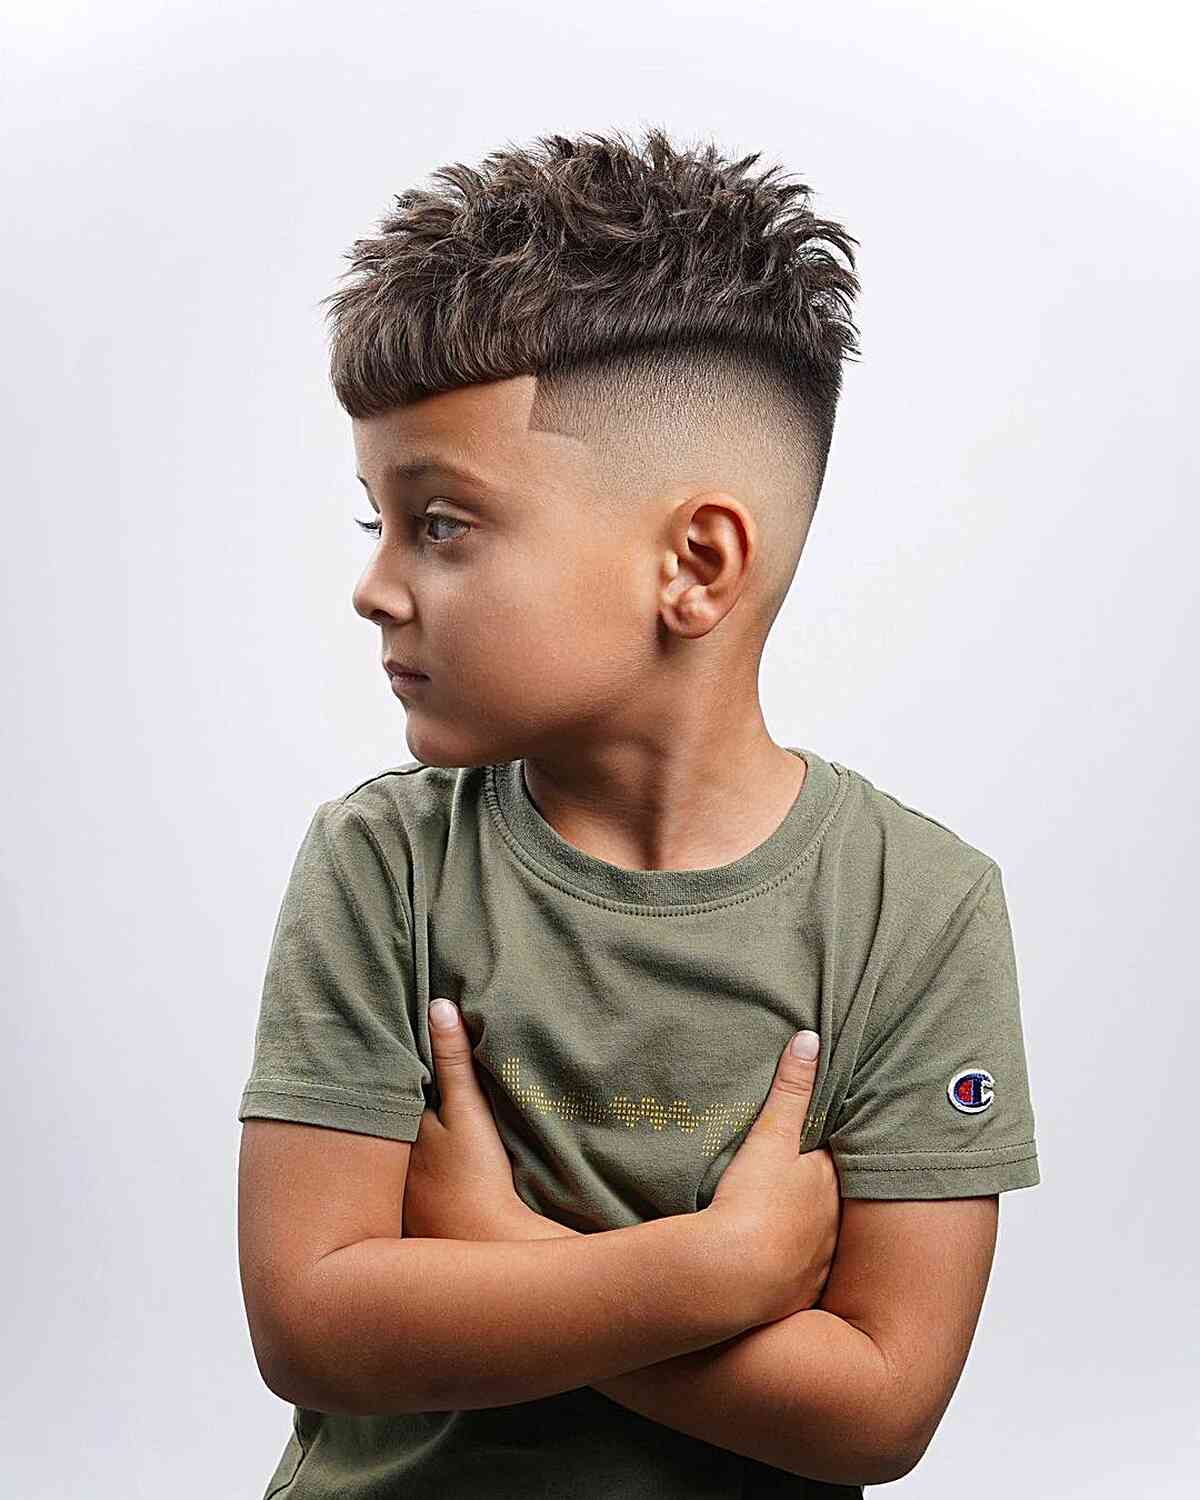 Short Hairstyles for boys 2023 - The Hair Stylish-hkpdtq2012.edu.vn